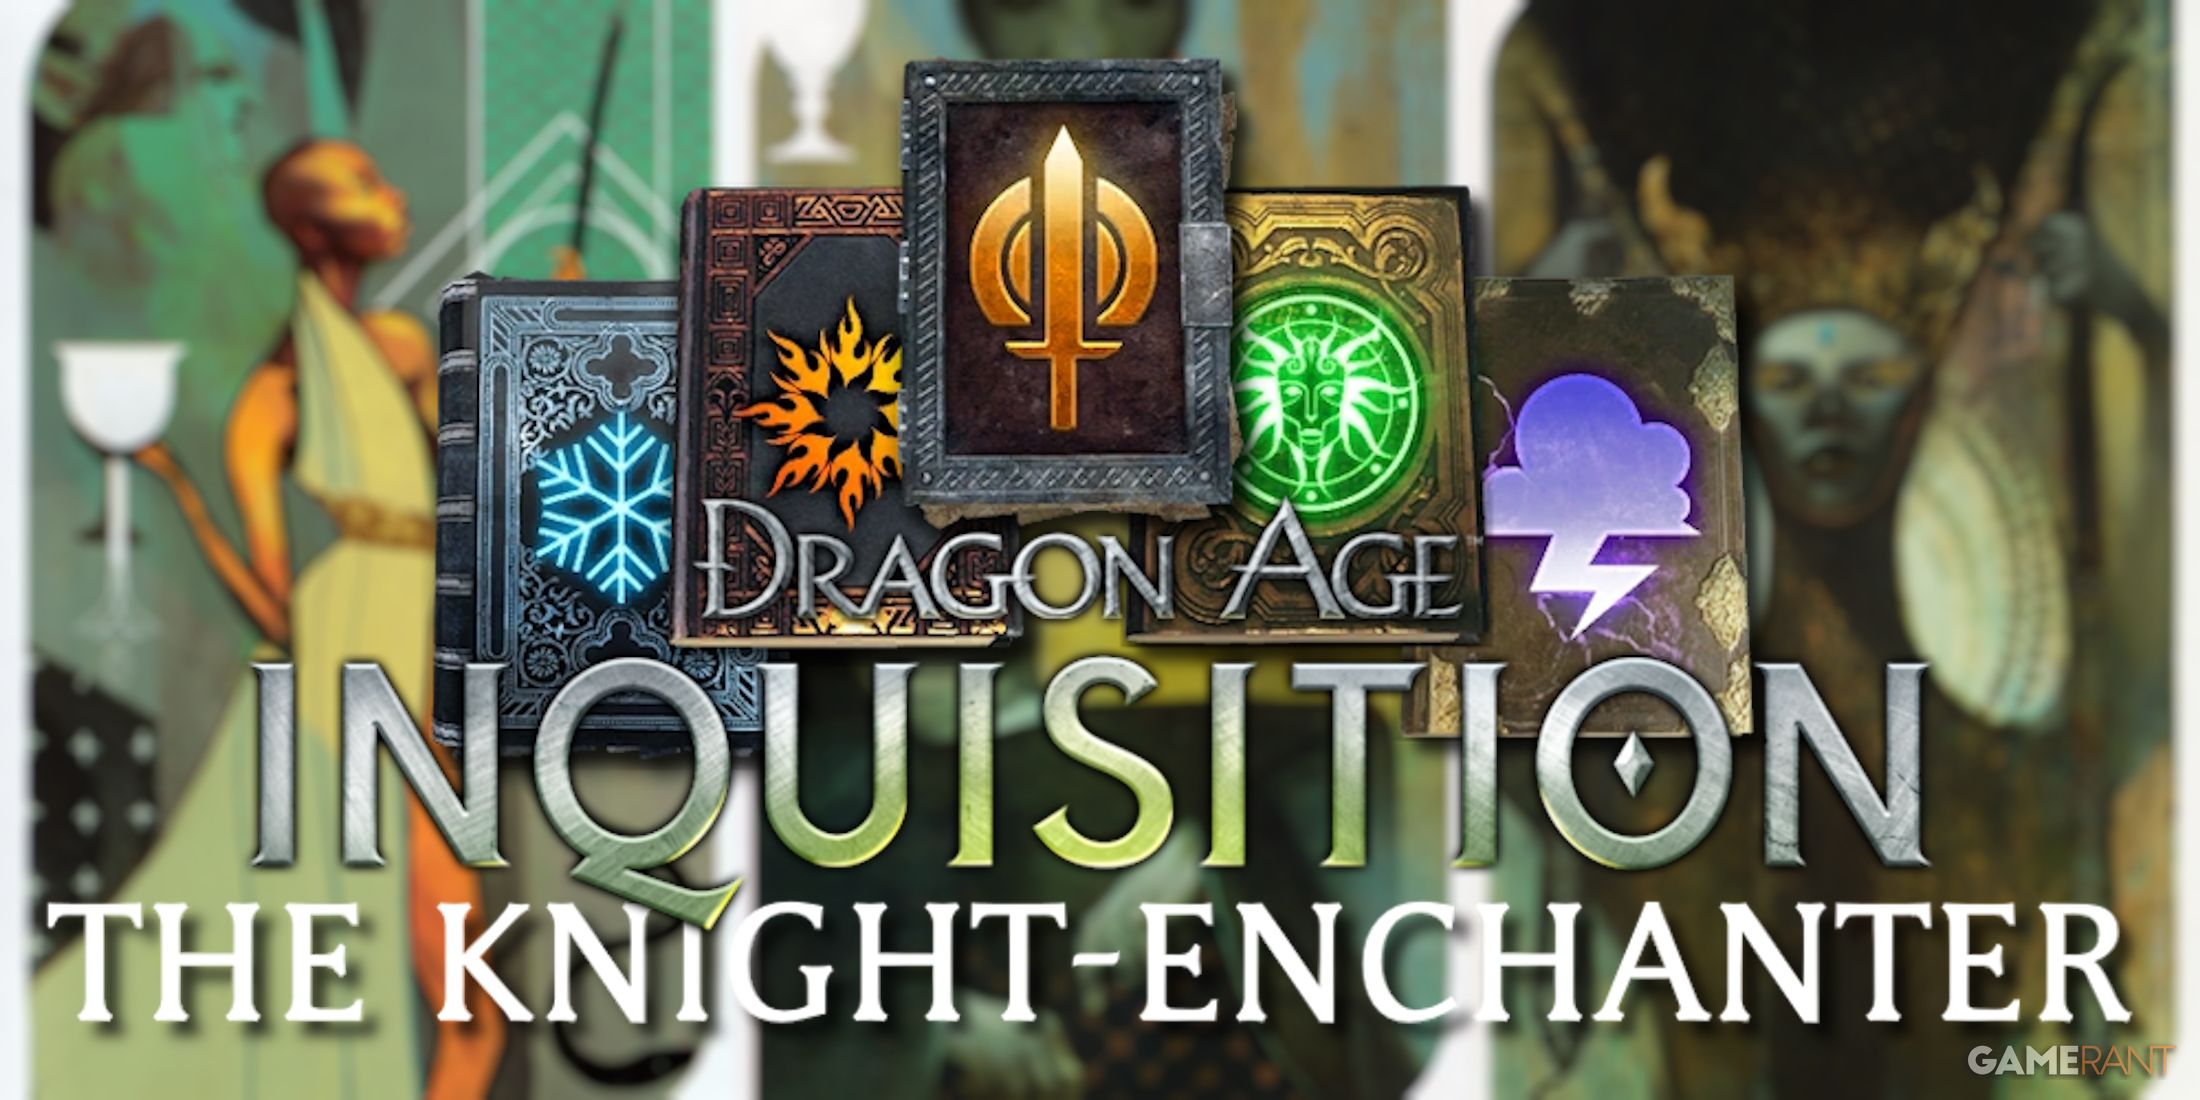 dragon age inquision logo vivienne tarot background knight-enchanter build